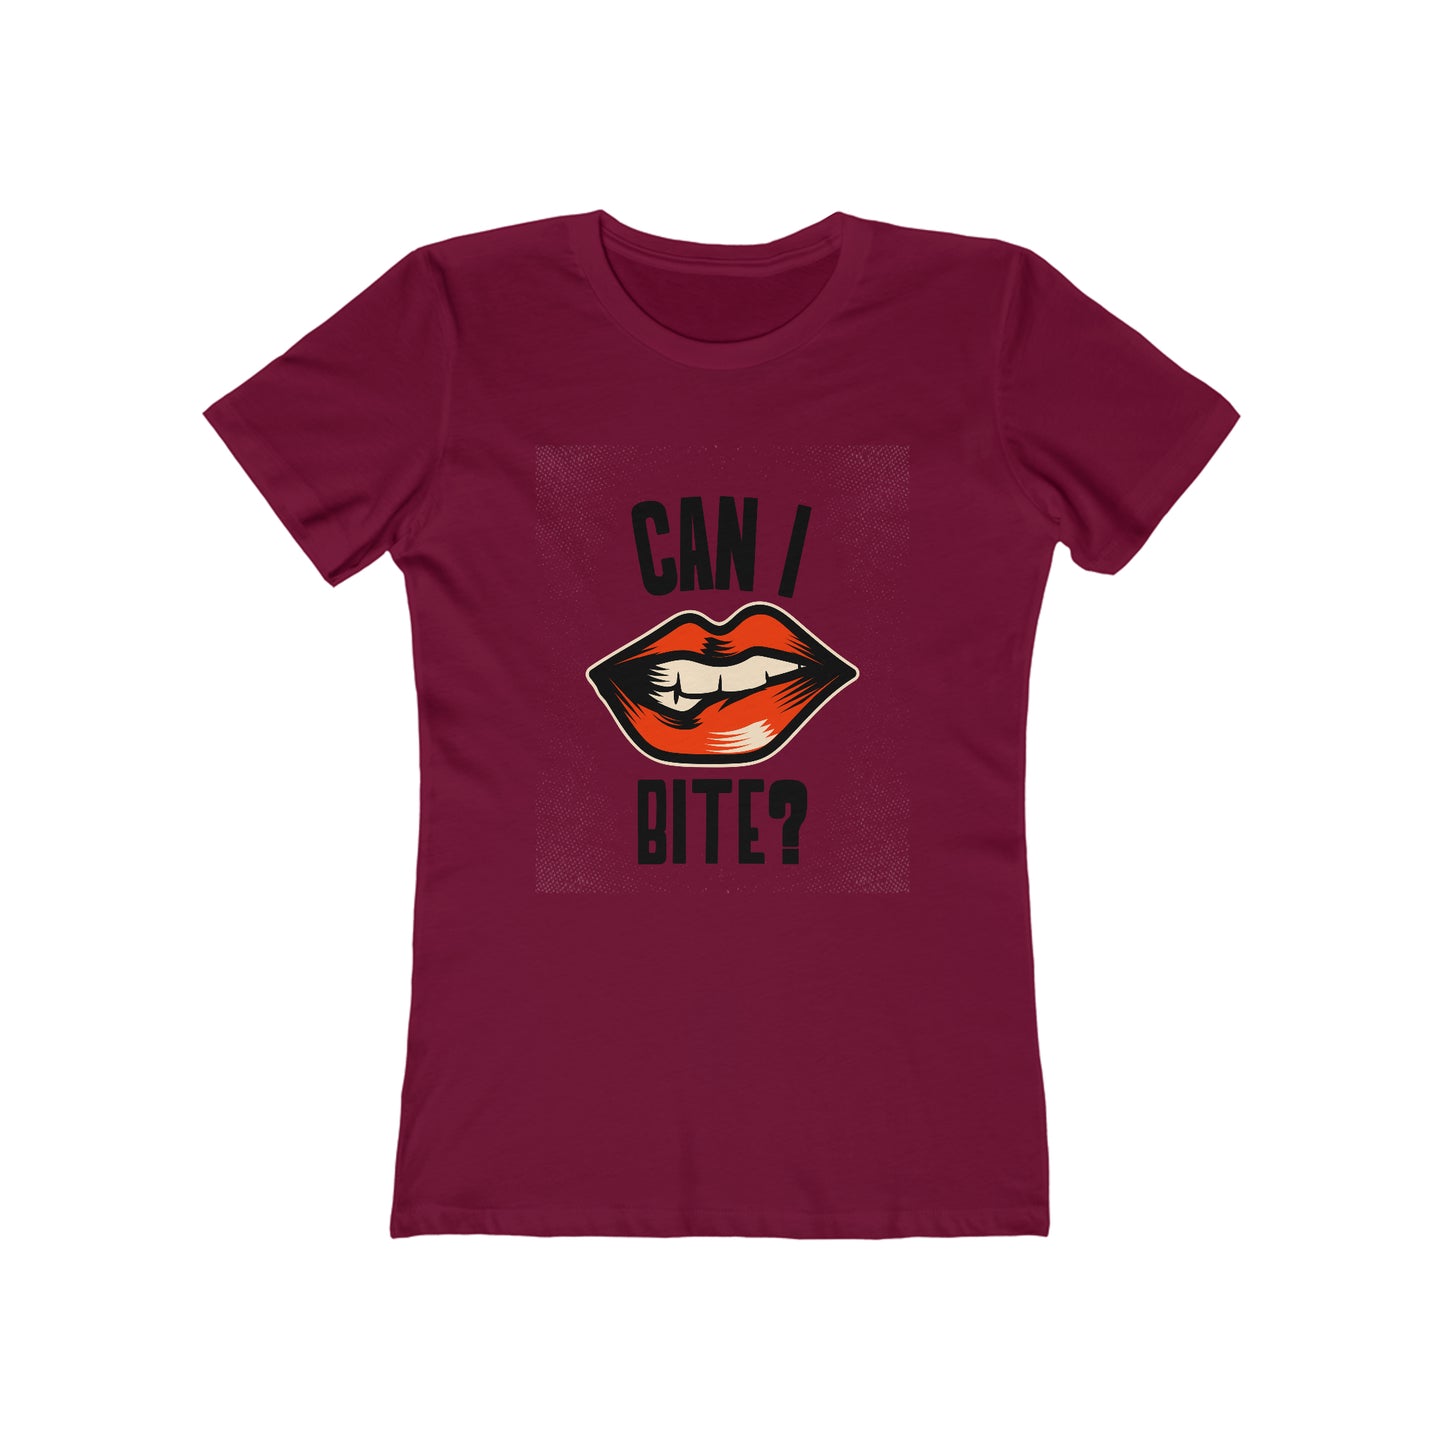 Can I Bite? - Women's T-shirt